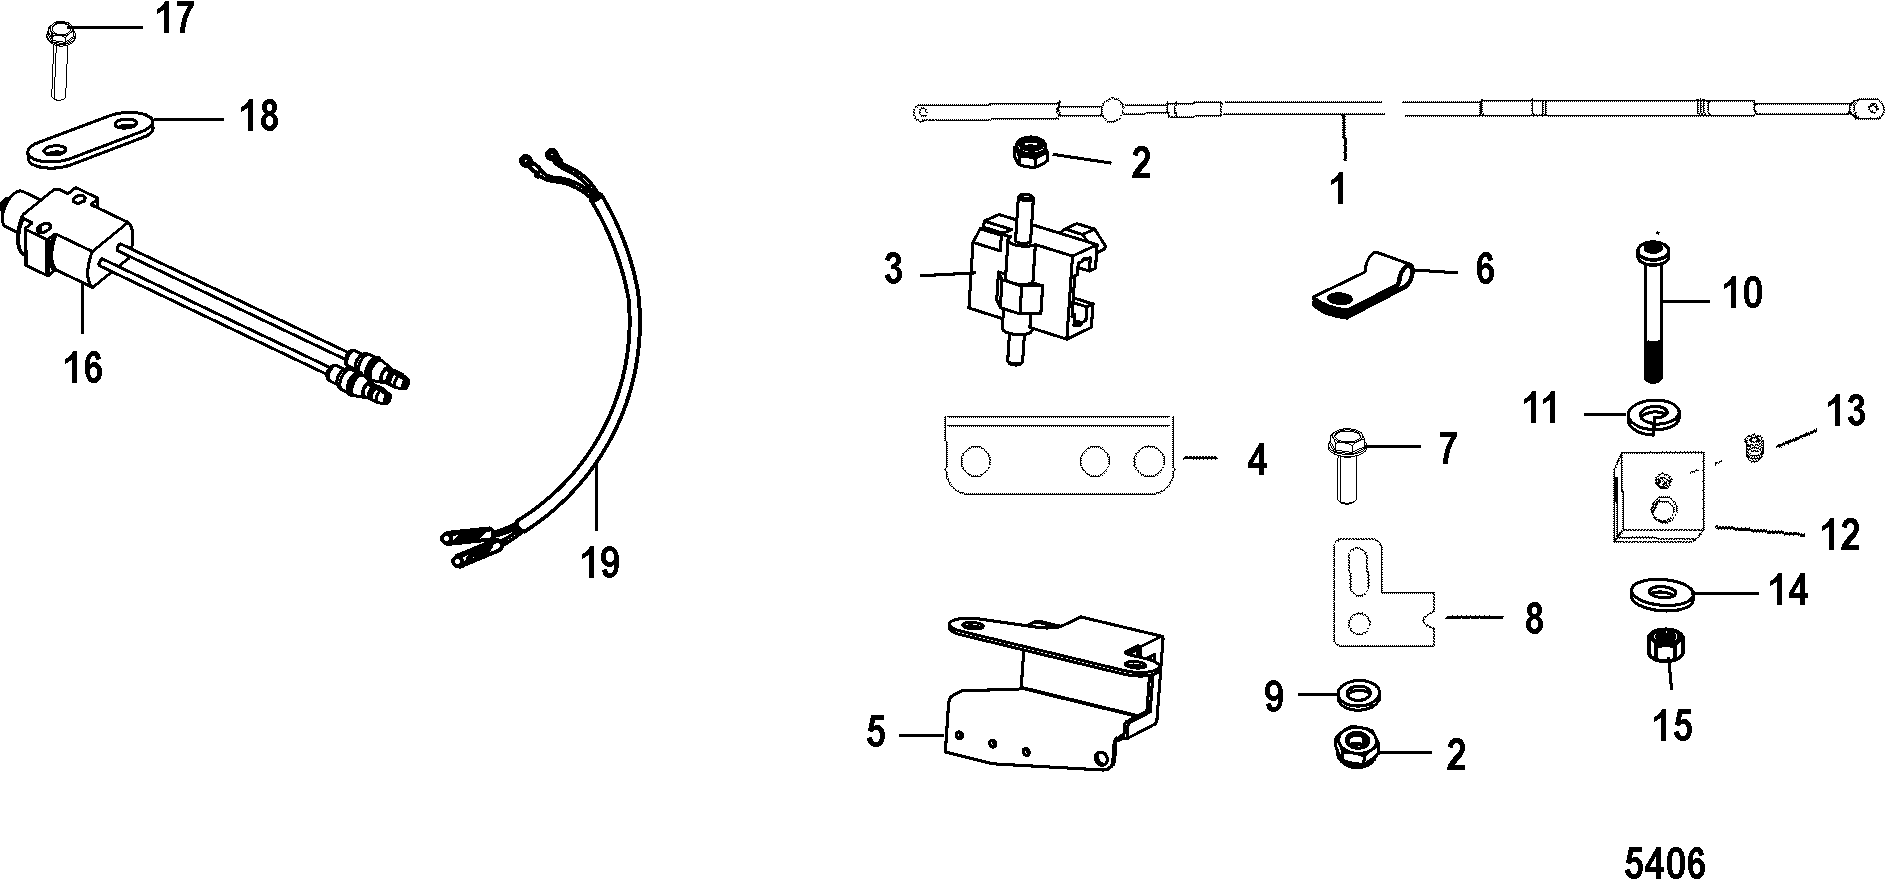 Tiller Handle Adapter Kit(Jet 80)